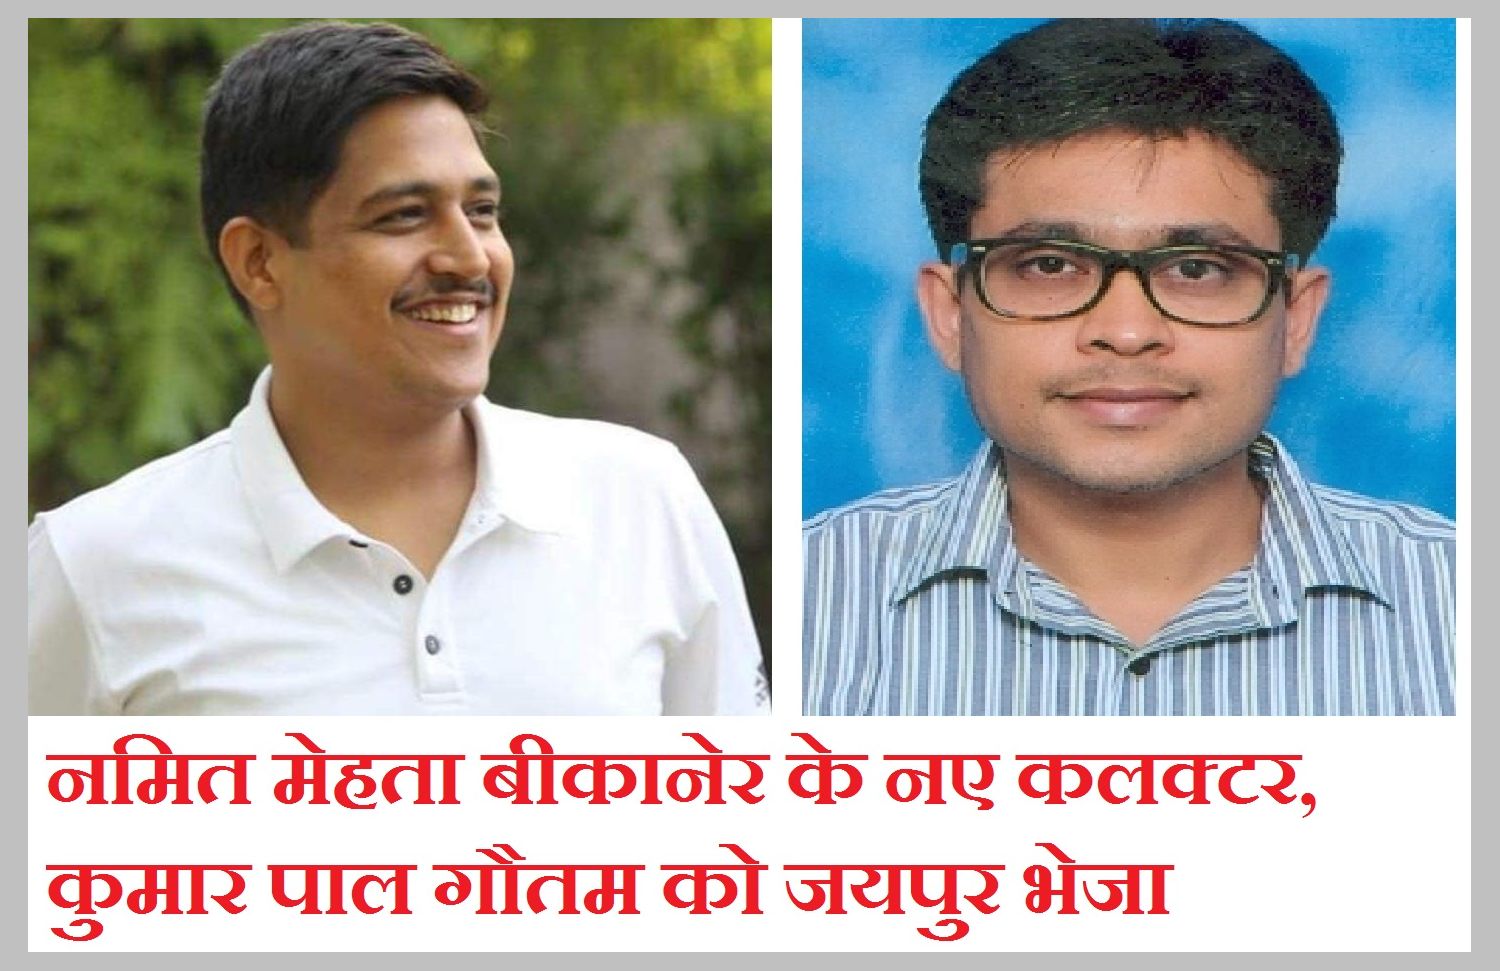 नमित मेहता बीकानेर के नए कलक्टर, कुमार पाल गौतम को जयपुर भेजा